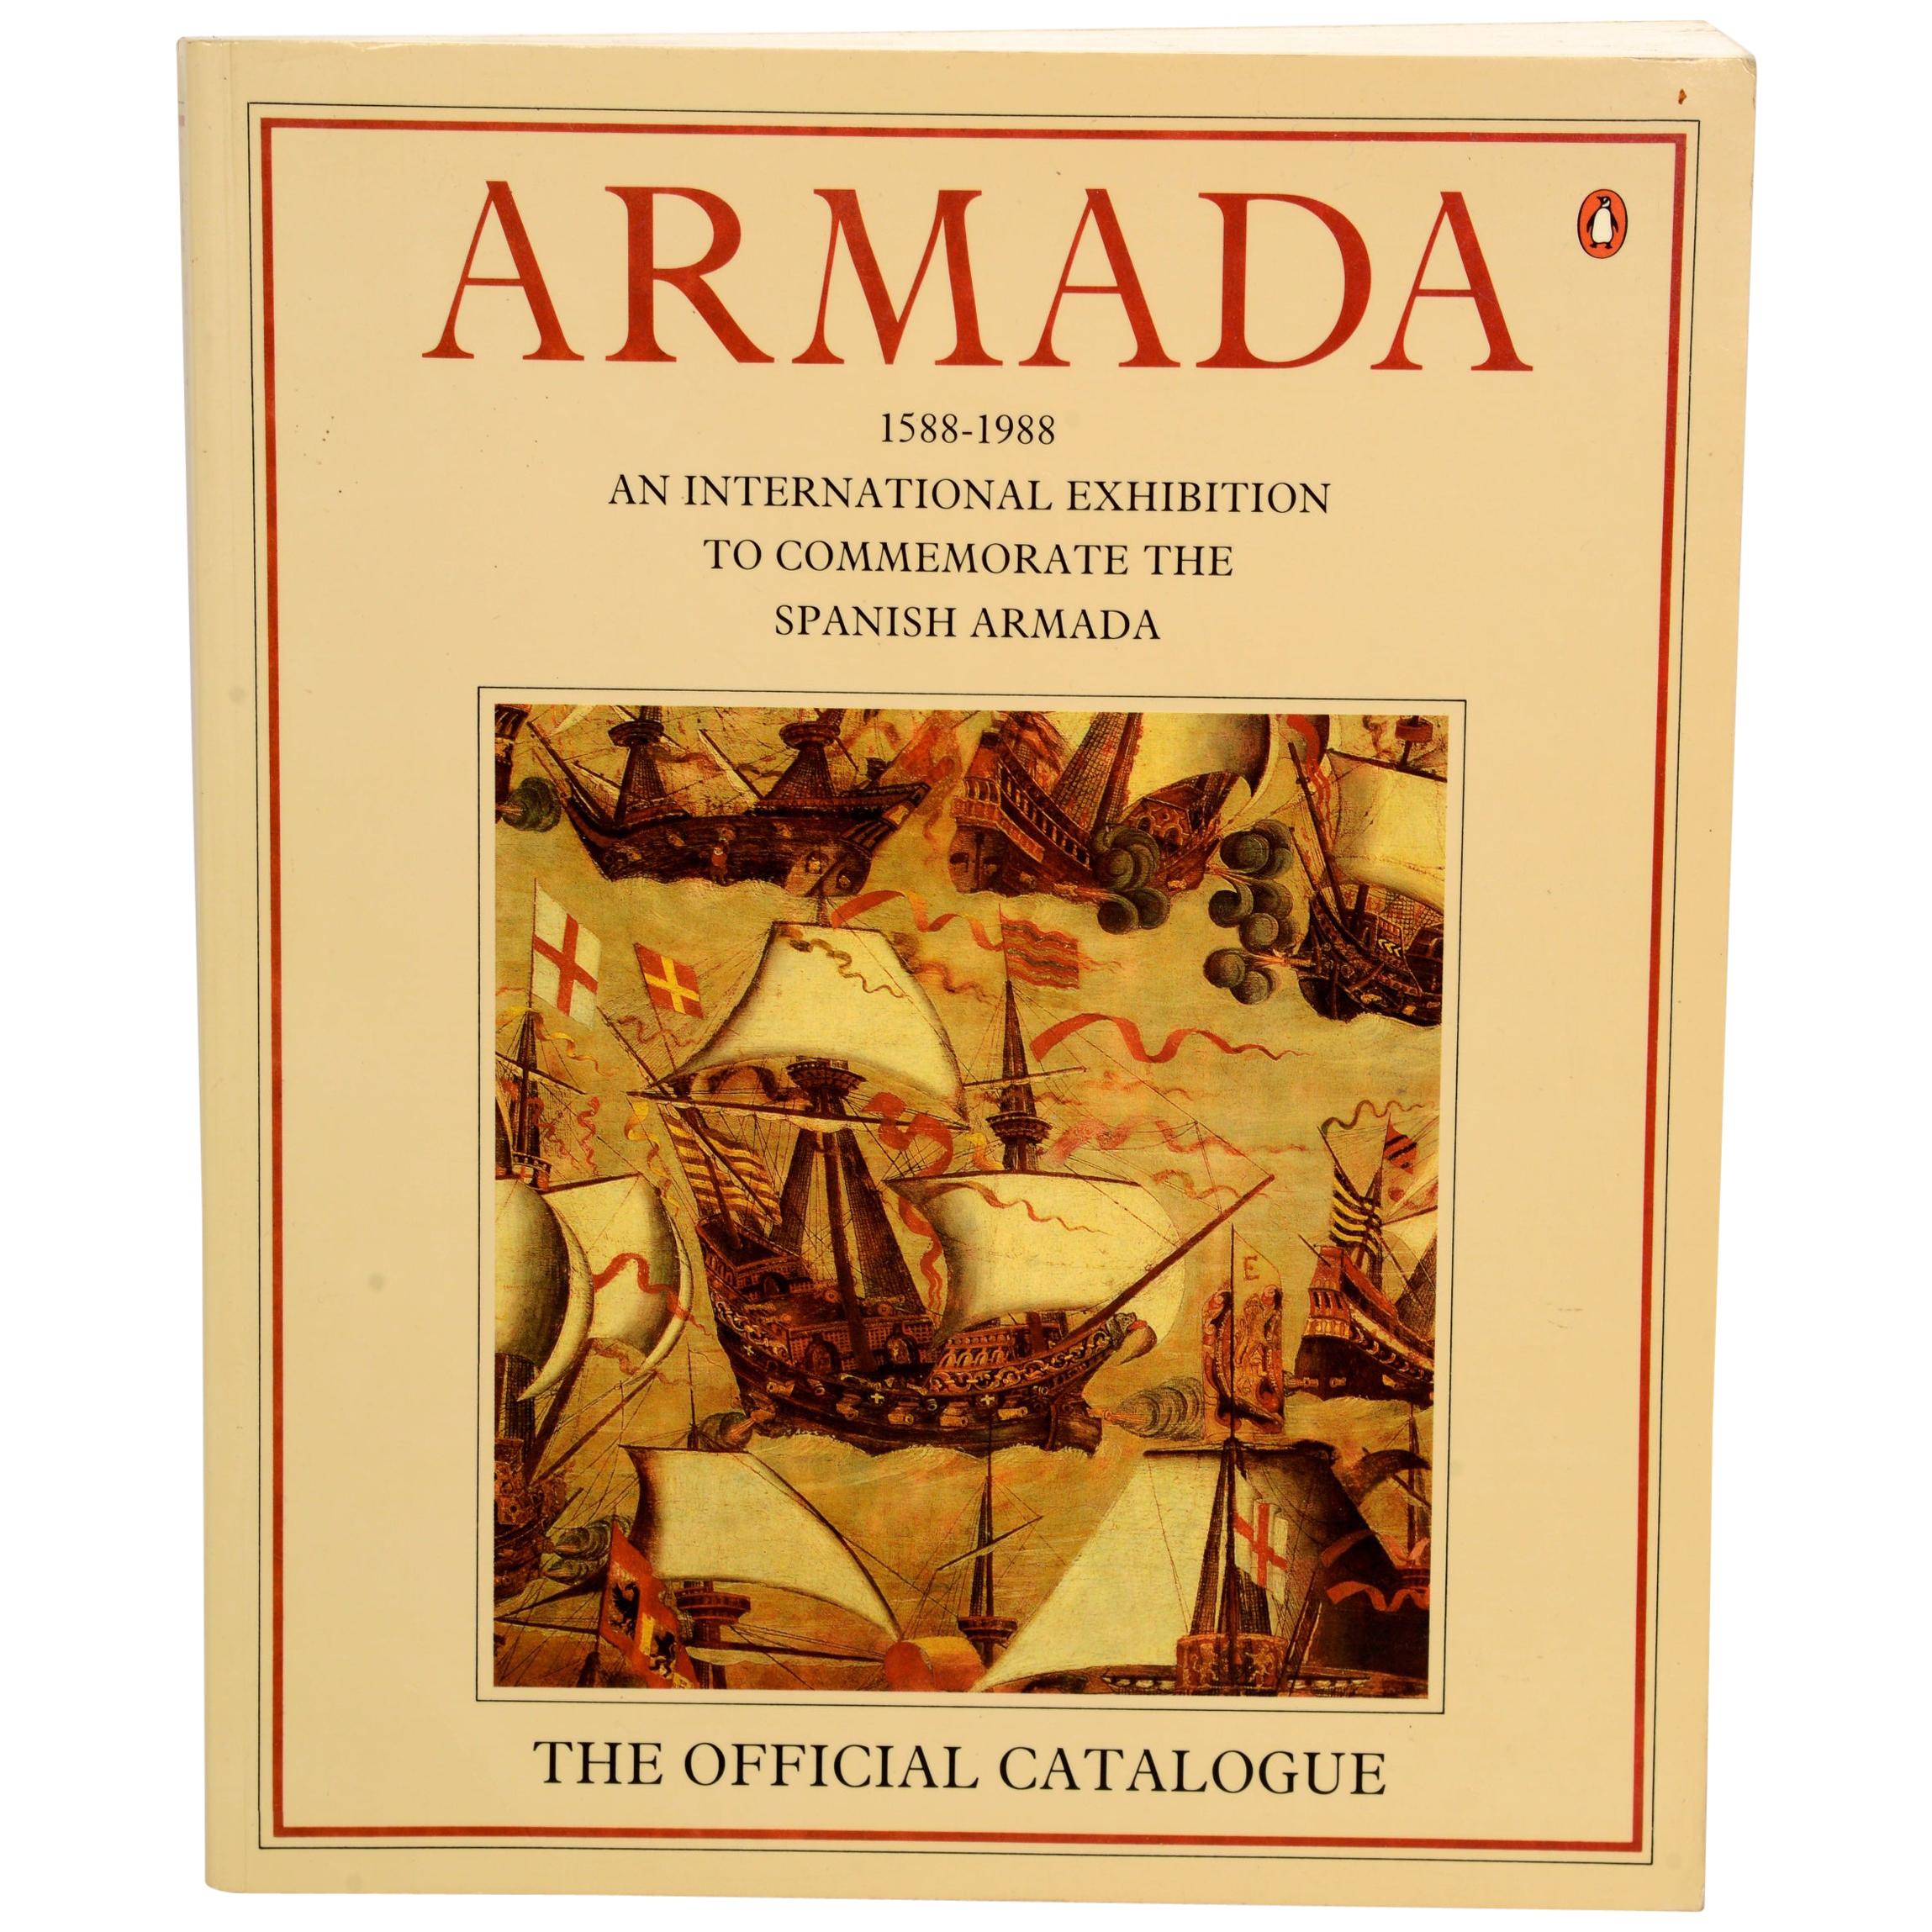 Armada, 1588-1988 An International Exhibition to Commemorate the Spanish Armada